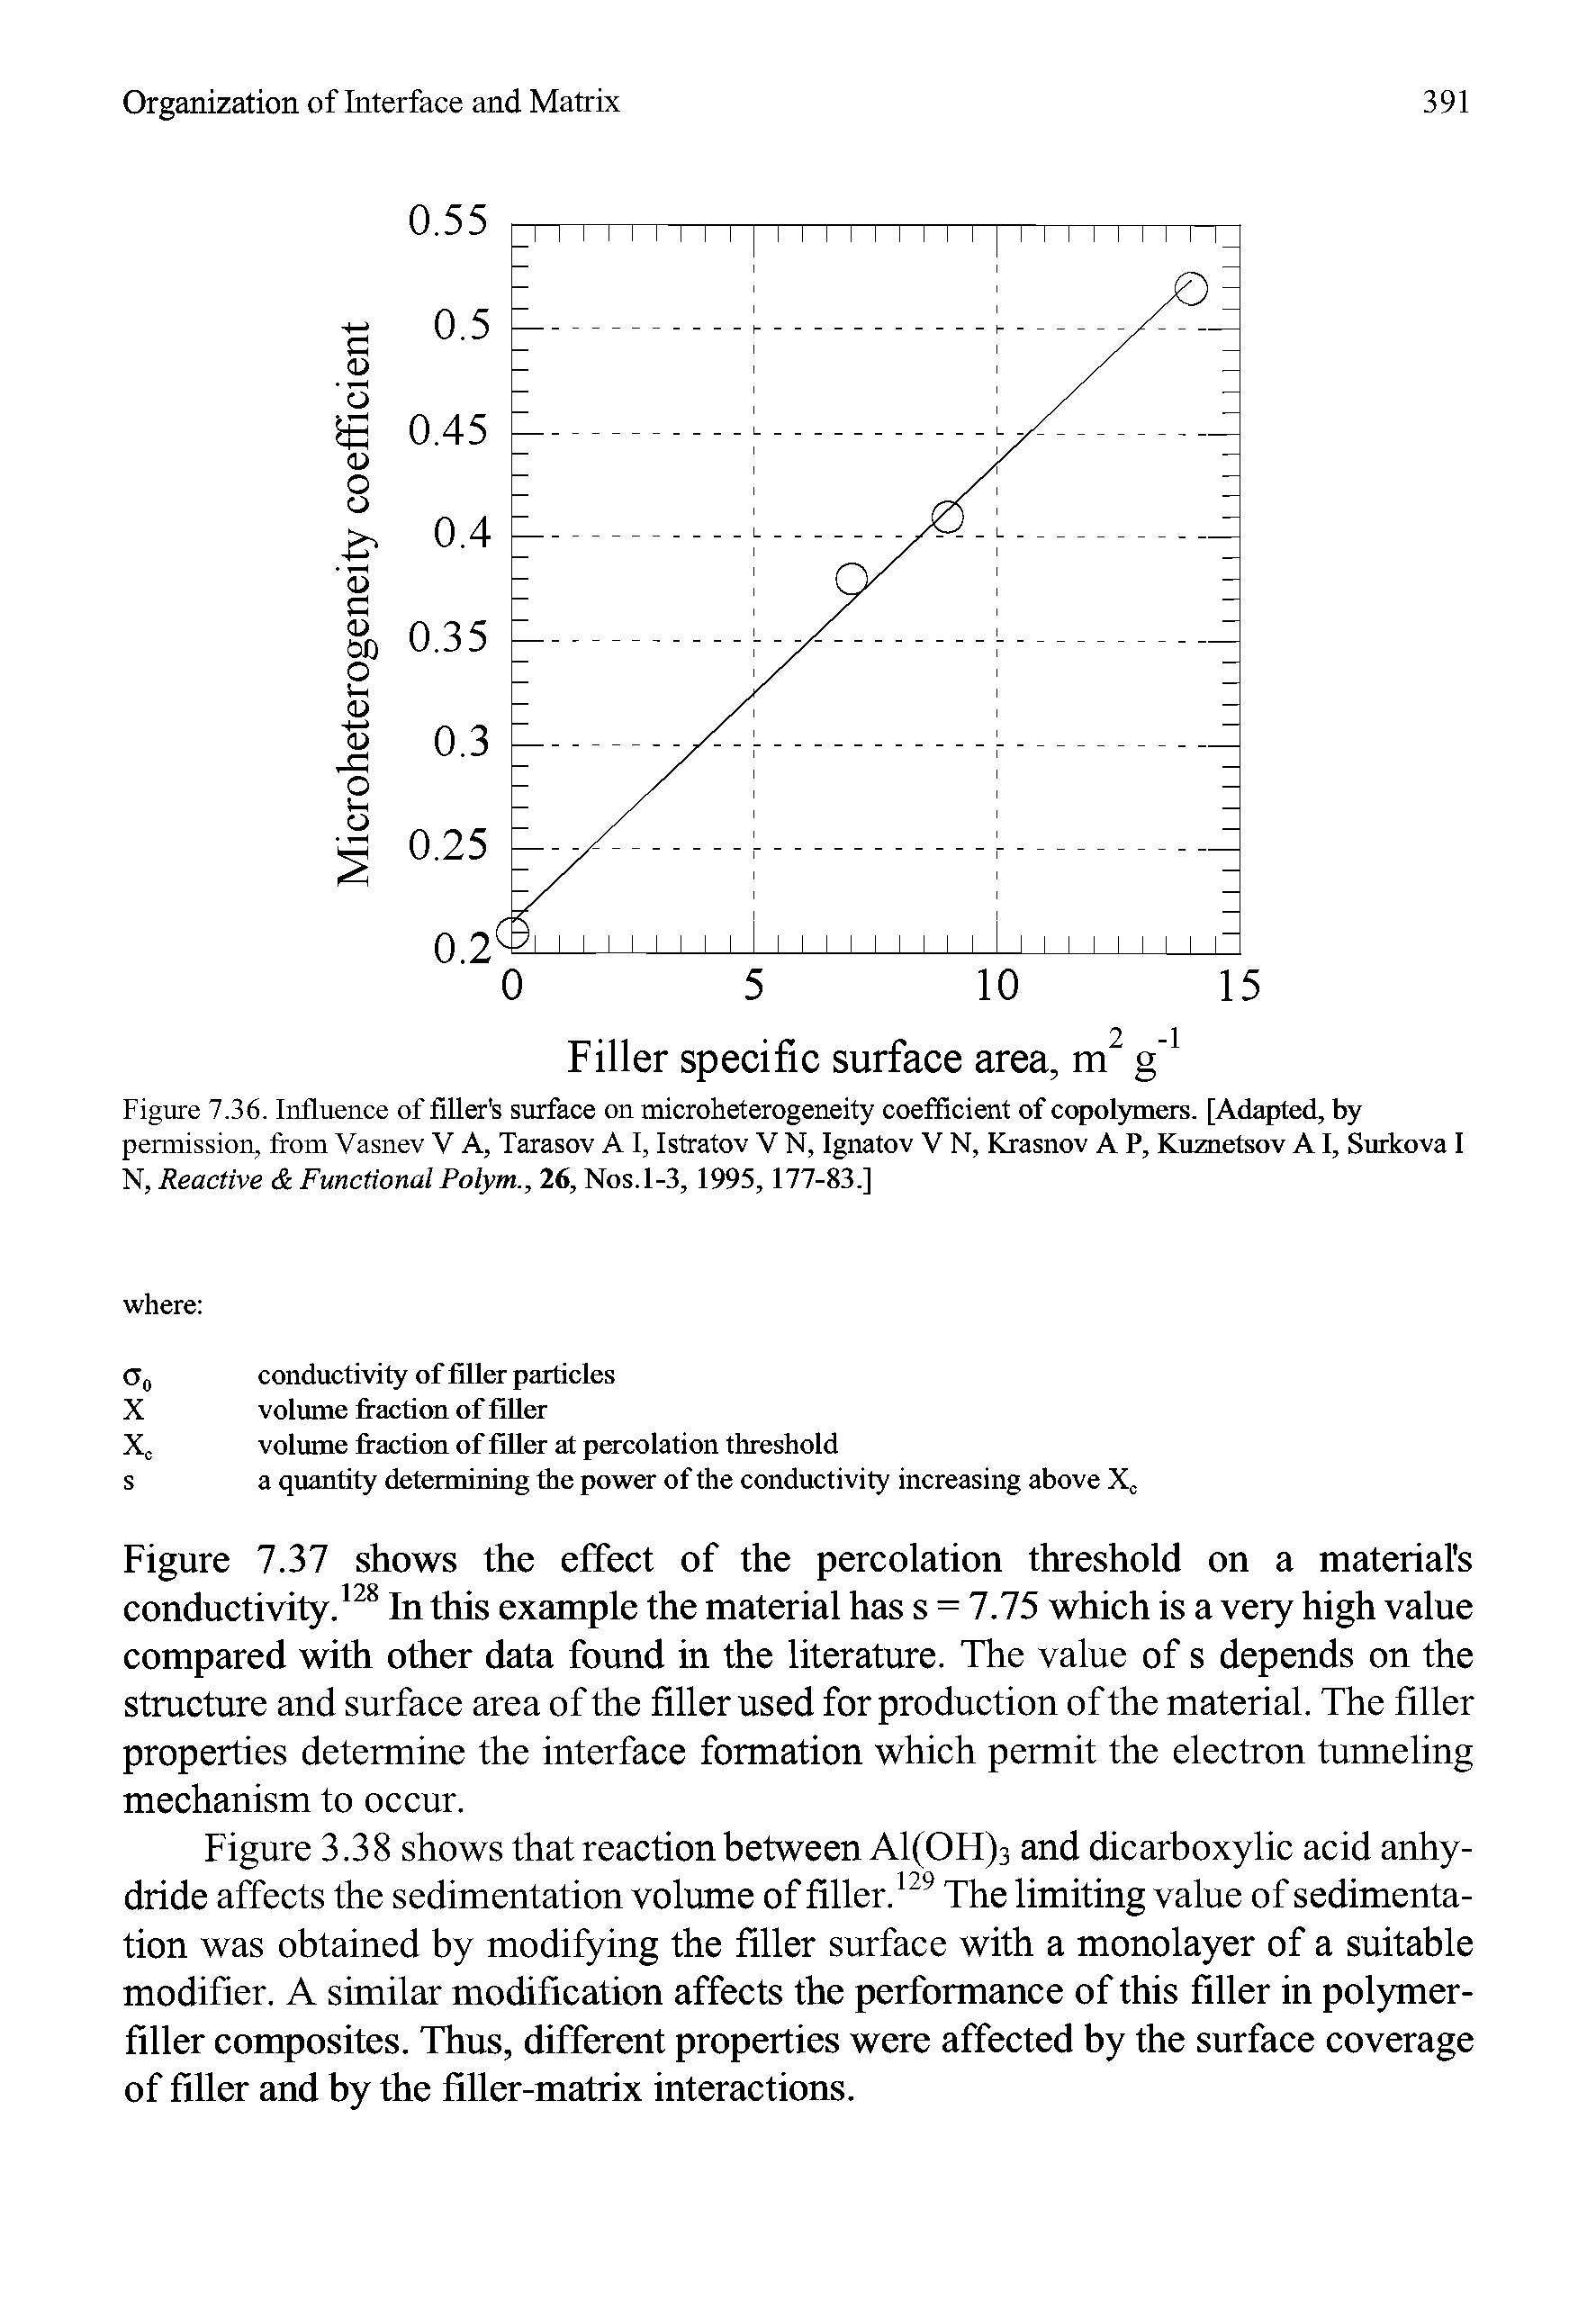 Figure 7.36. Influence of filler s surface on microheterogeneity coefficient of copolymers. [Adapted, by permission, from Vasnev V A, Tarasov A I, Istratov V N, Ignatov V N, Krasnov A P, Kuznetsov A I, Surkova I N, Reactive Functional Polym., 26, Nos.1-3, 1995, 177-83.]...